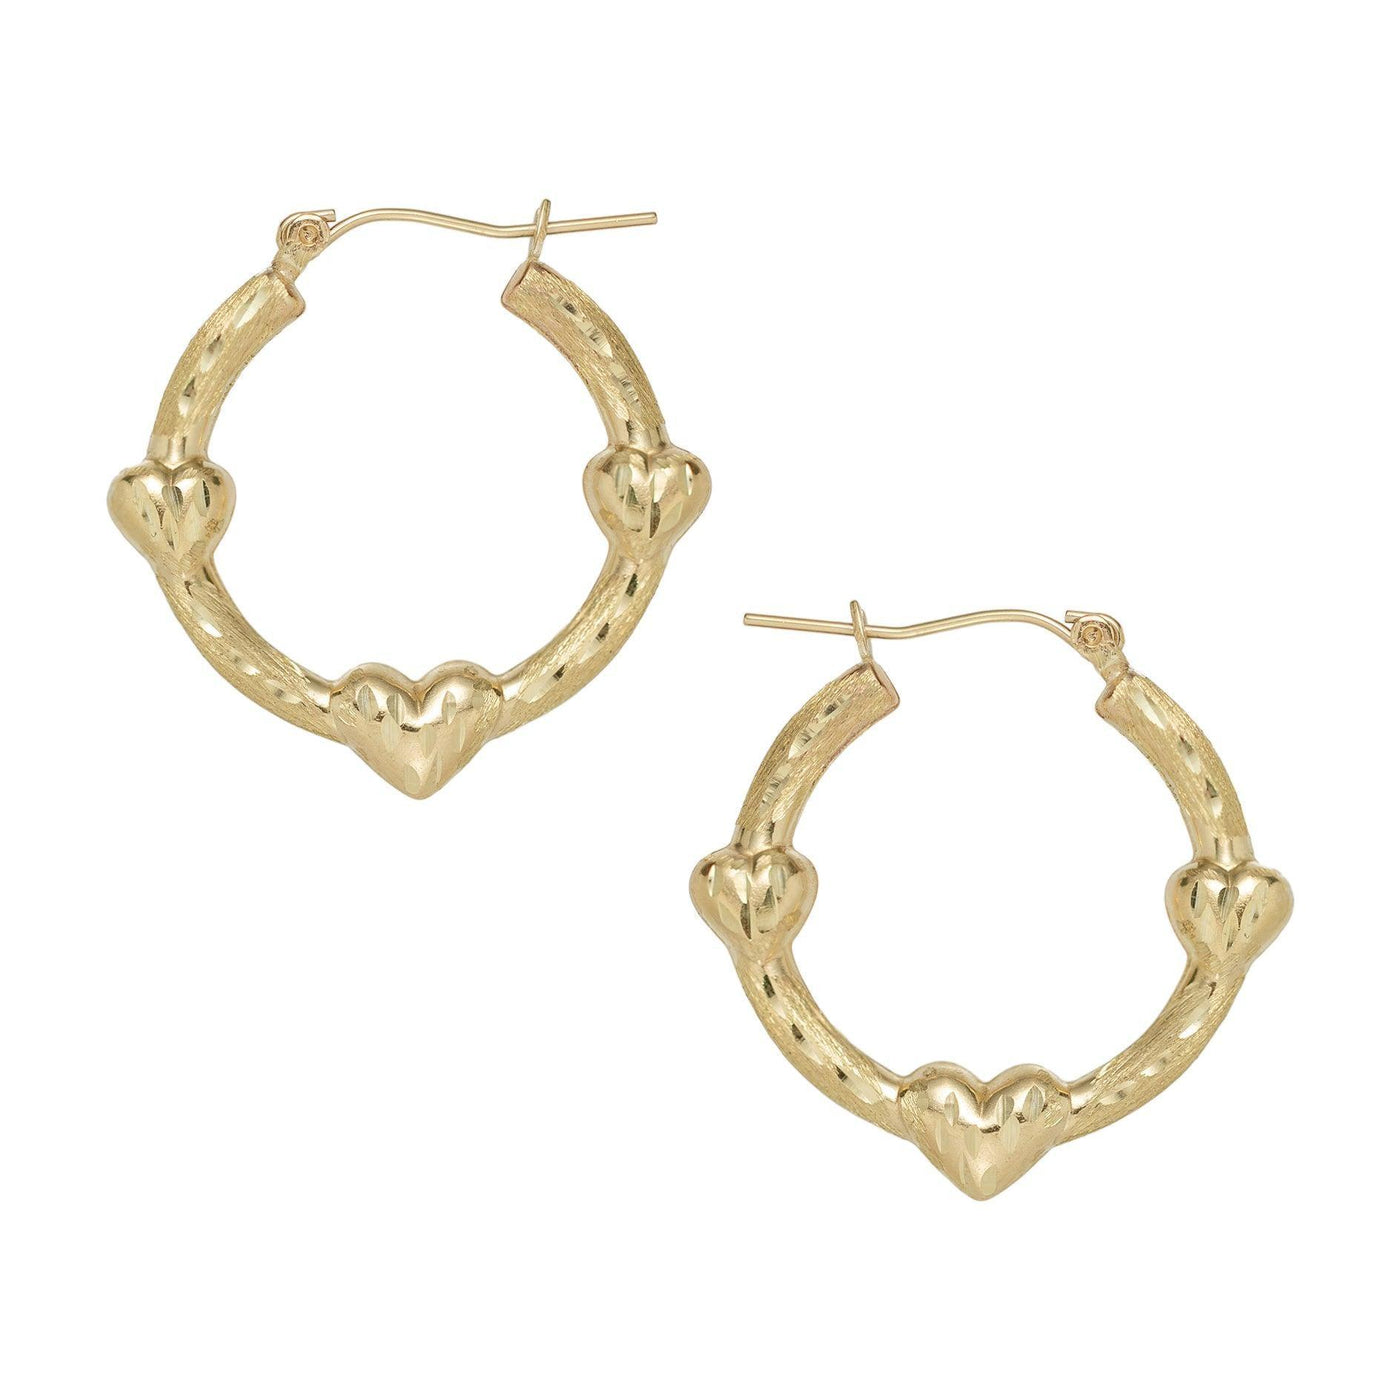 1 1/4" Diamond Cut Heart Hoop Earrings 10K Yellow Gold - bayamjewelry